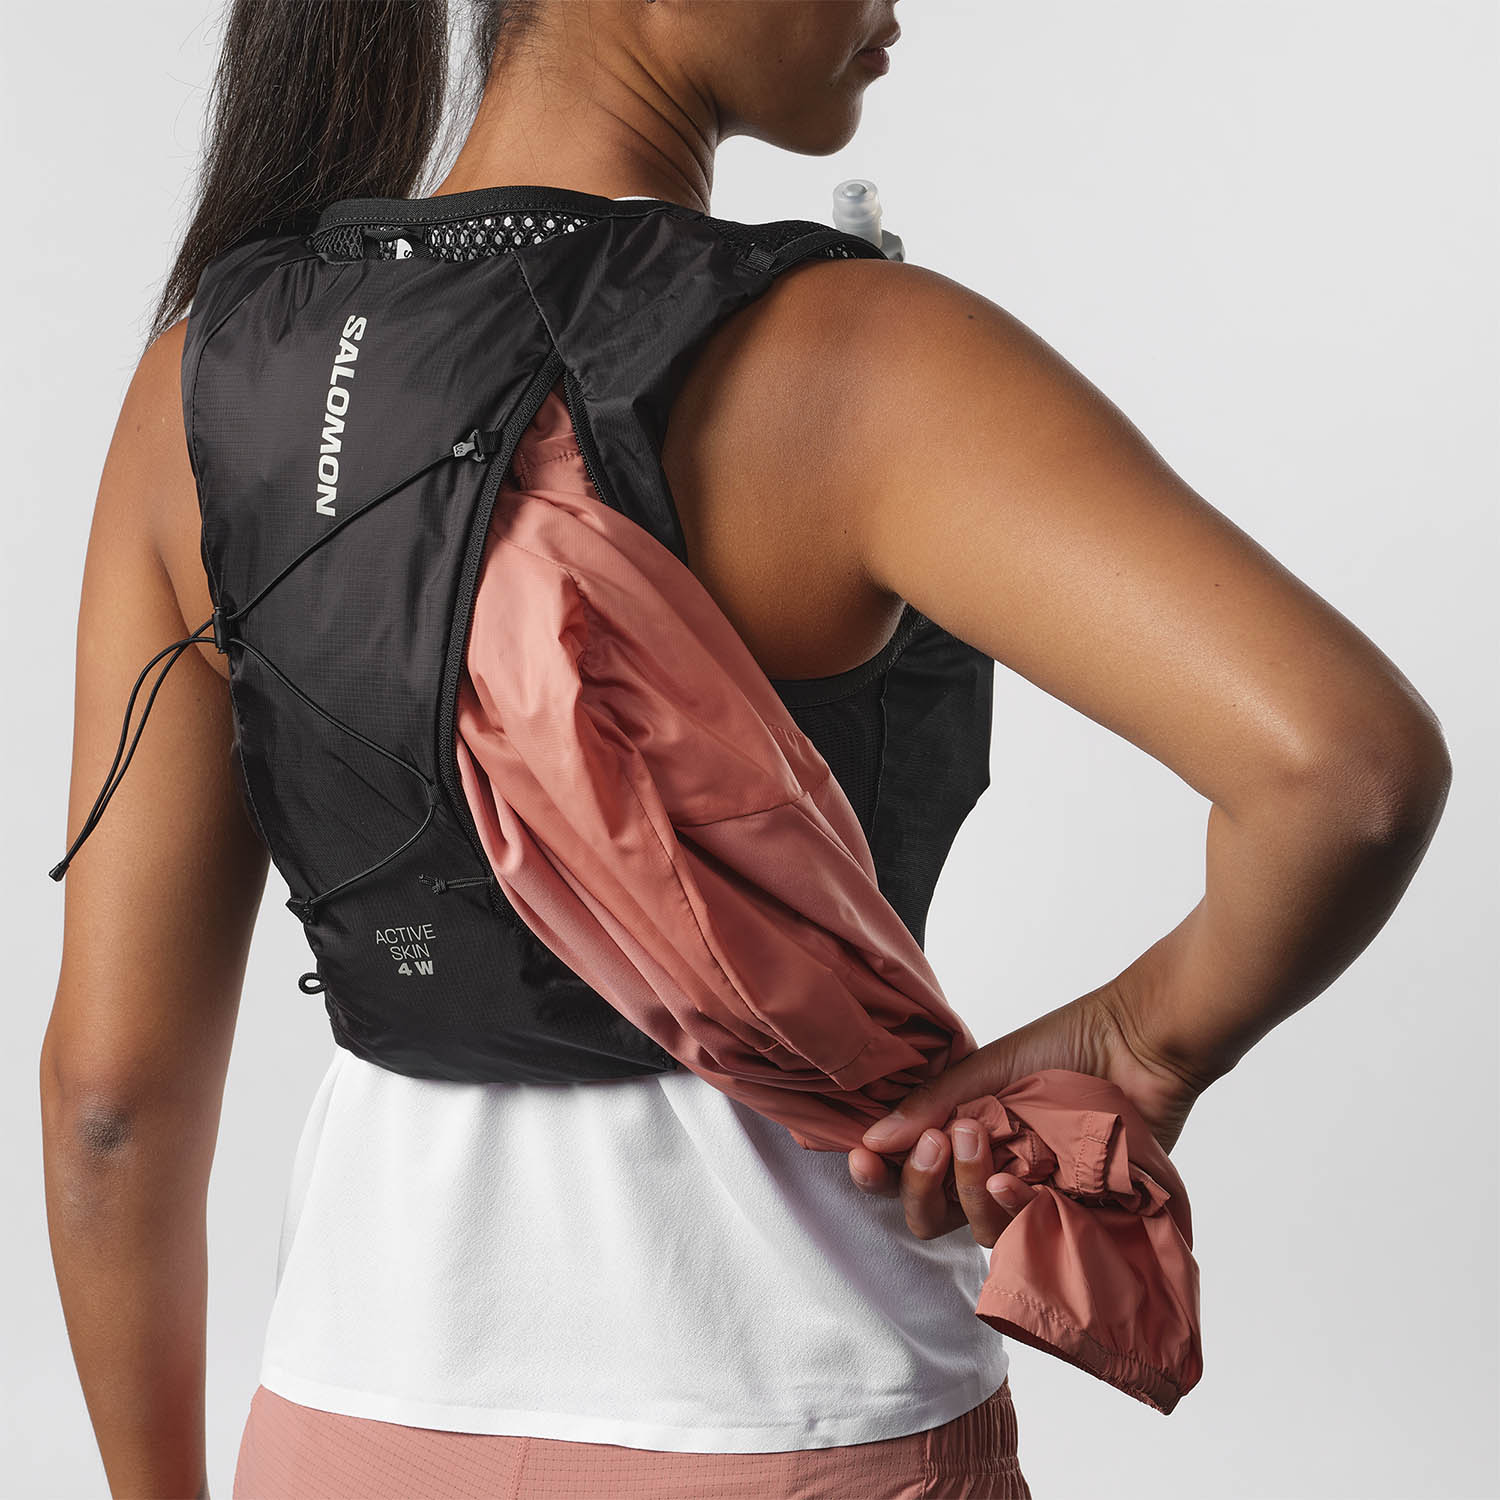 Salomon Active Skin 4 Women Set Backpack - Black